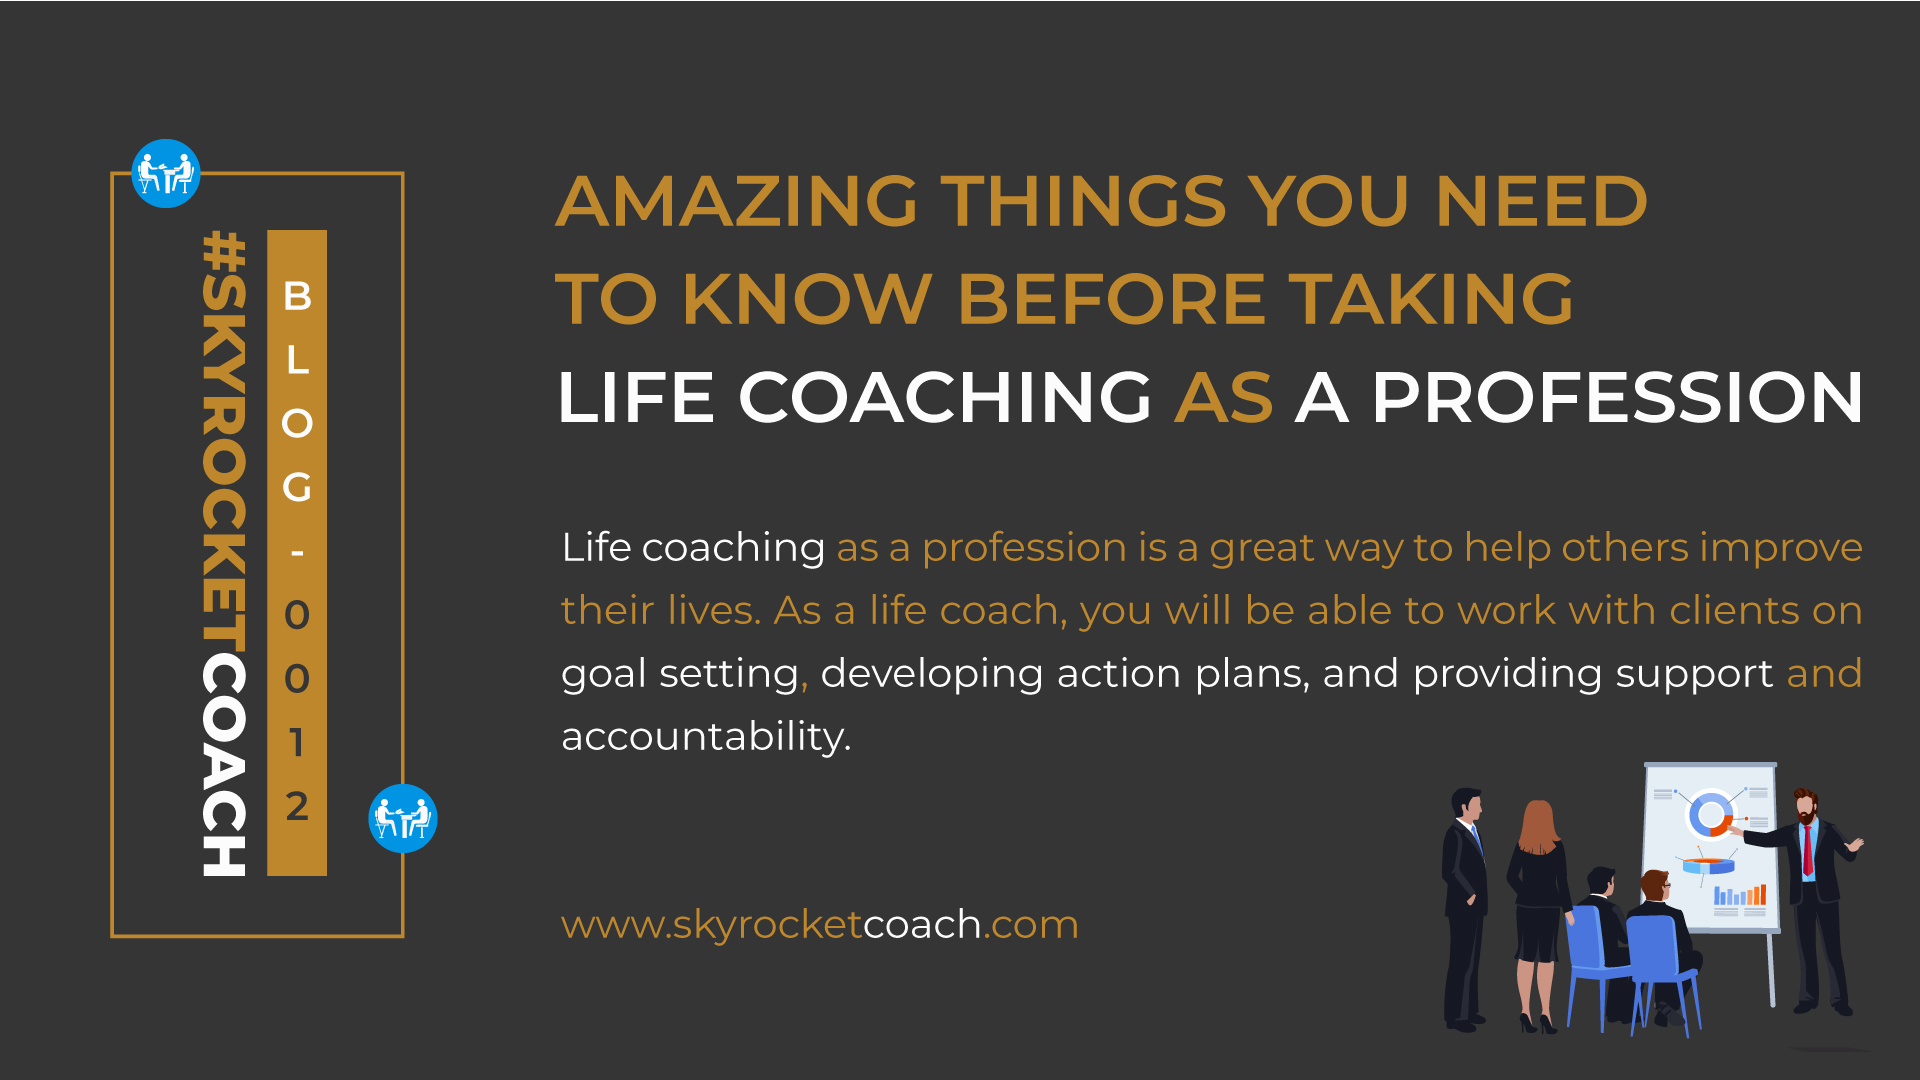 Life coaching as a profession